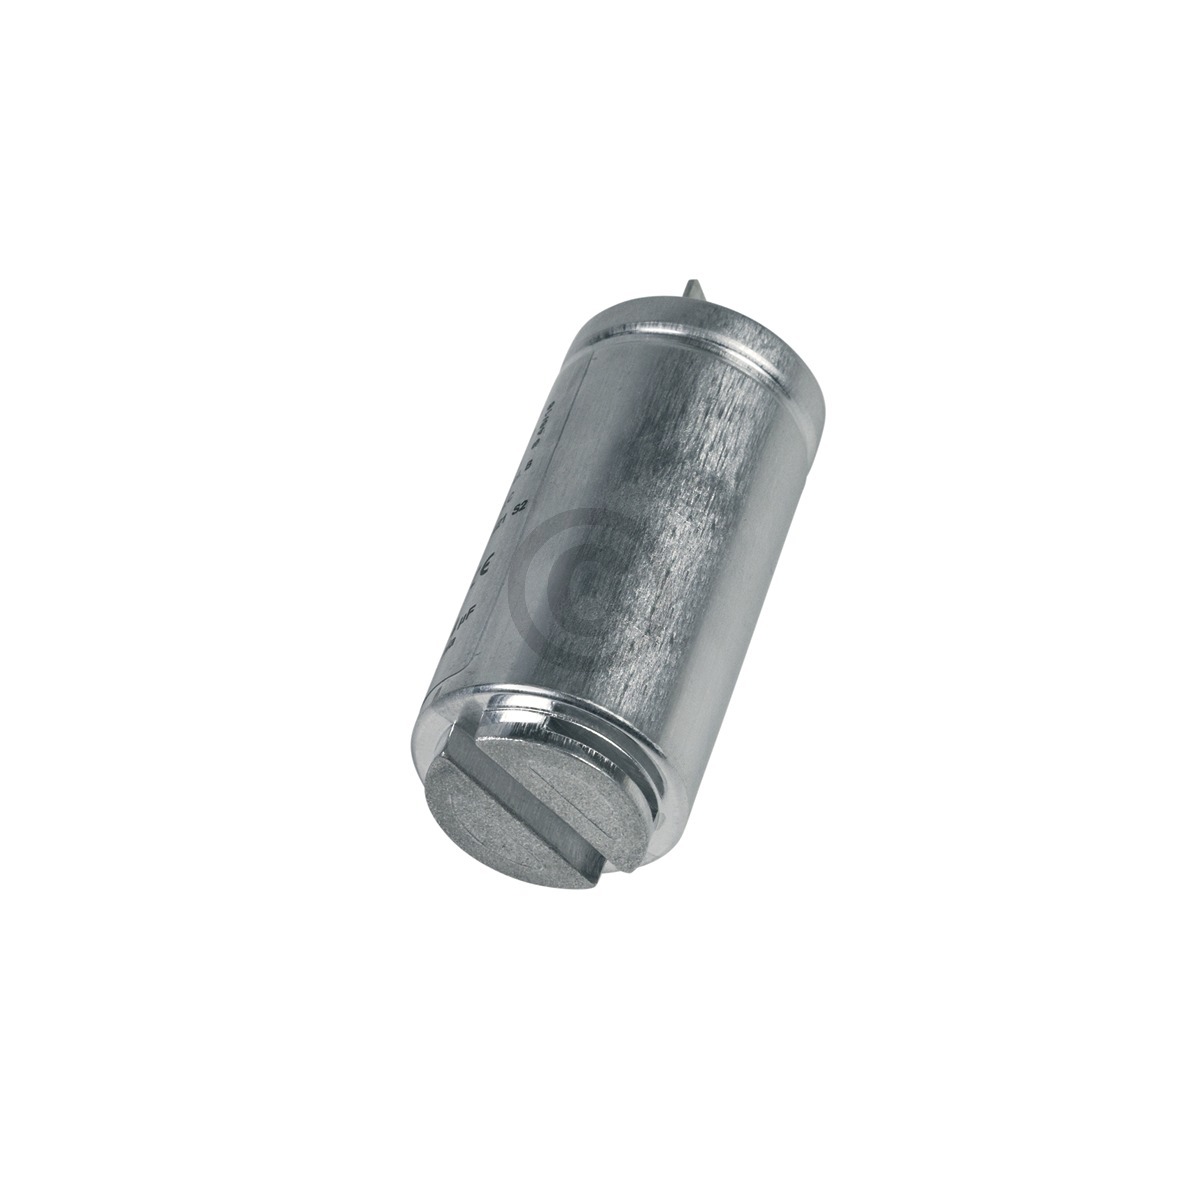 Kondensator 10µF AEG 125002061/5 für Trockner Waschtrockner 